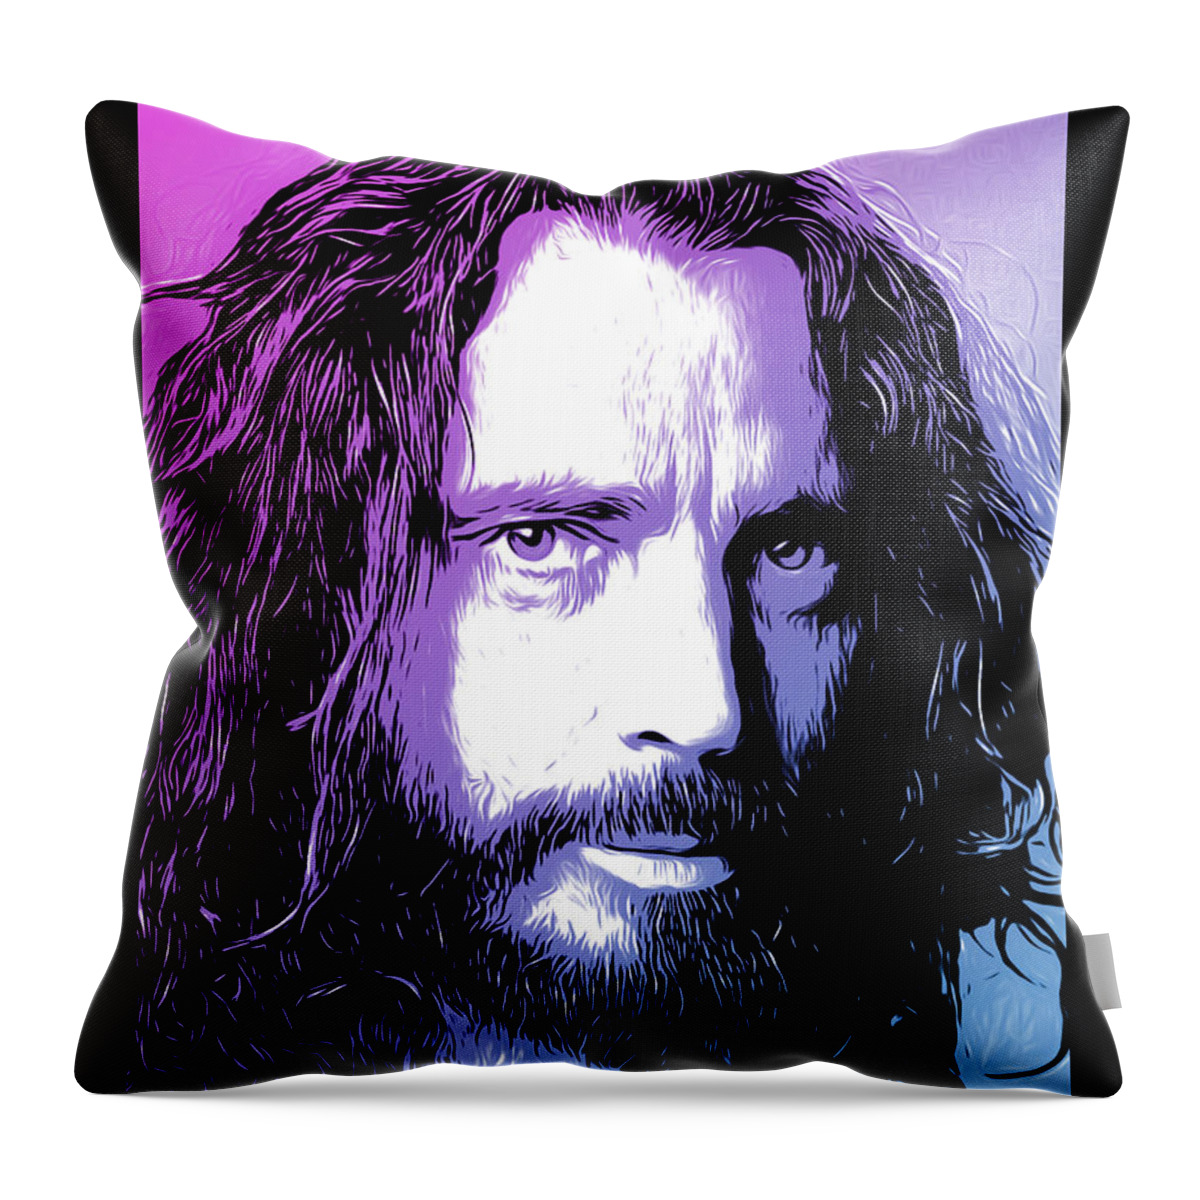 Chris Cornell Throw Pillow featuring the digital art Chris Cornell Tribute by Greg Joens